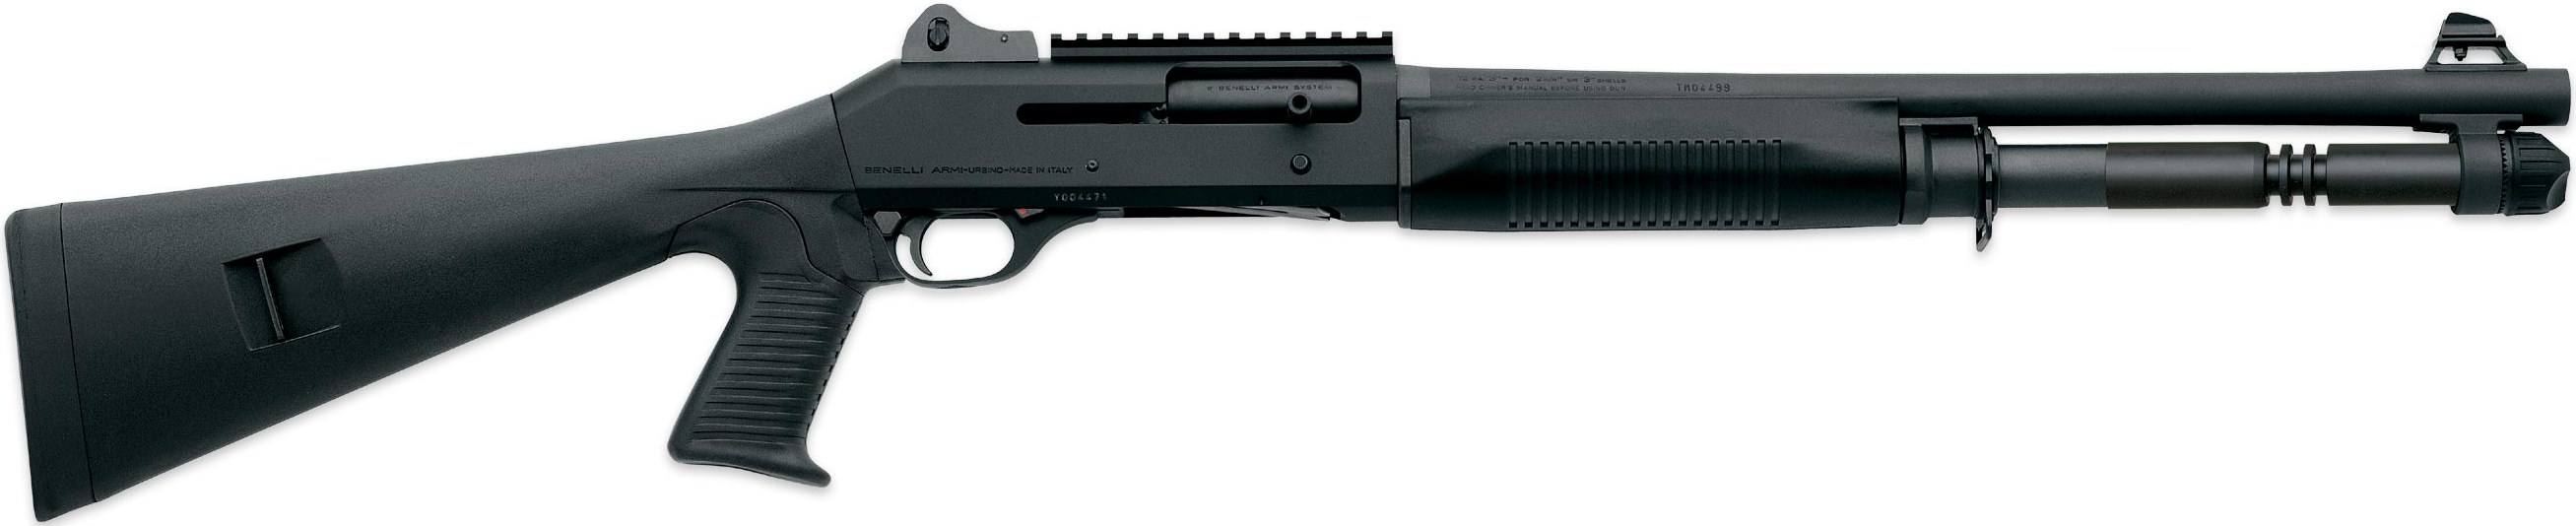 Benelli M4 Super Shotgun